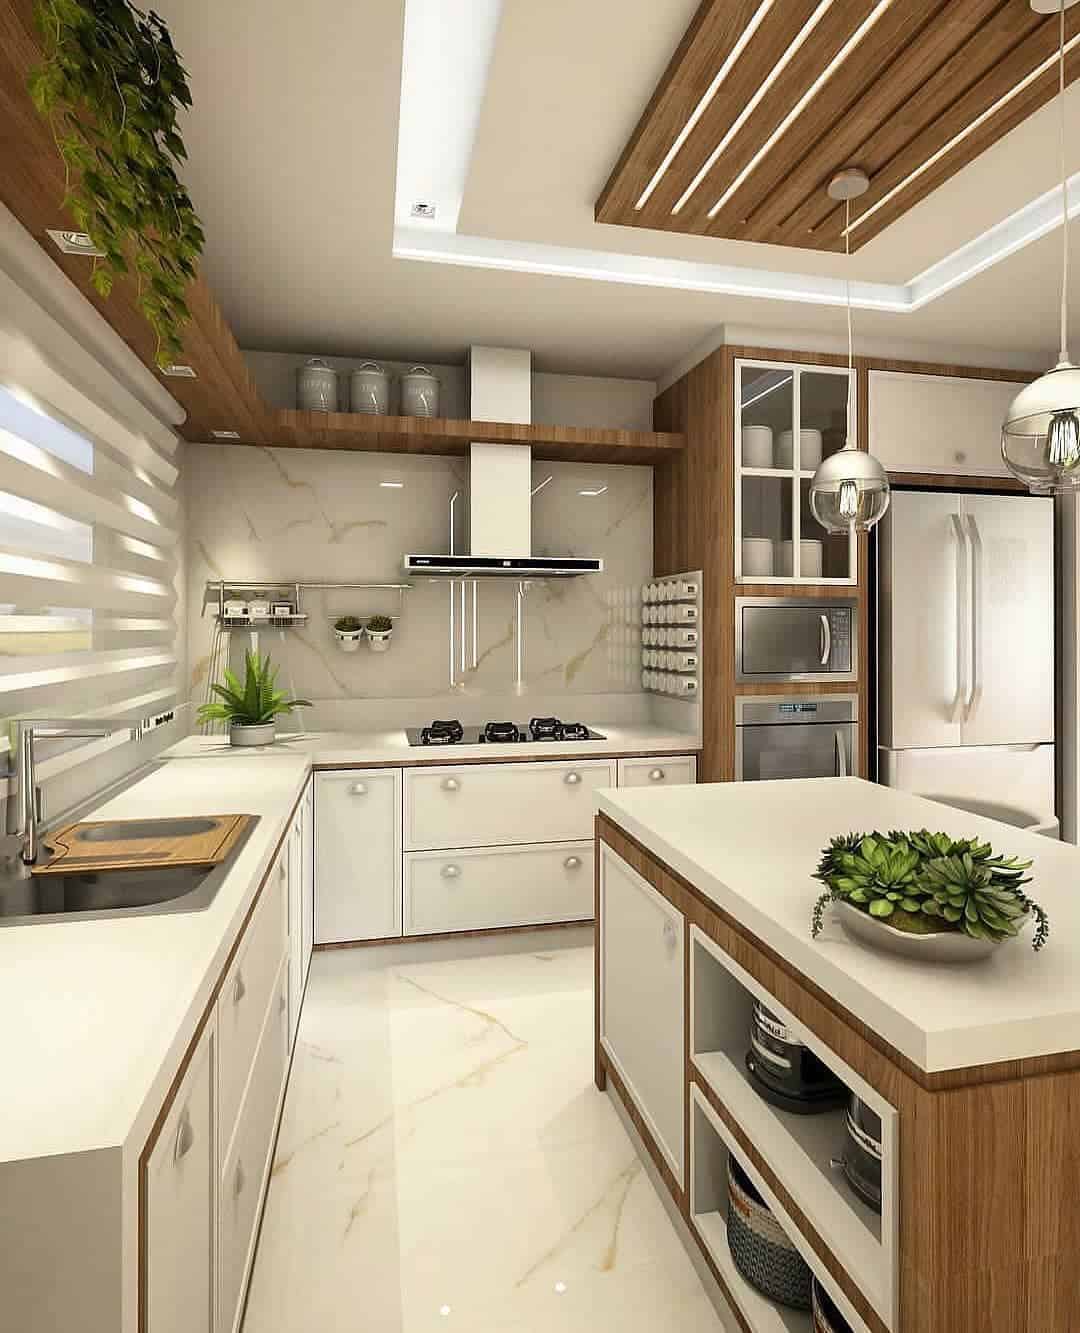 Modern Kitchens 2020: Cottage Style Kitchen Ideas (35 Photos)